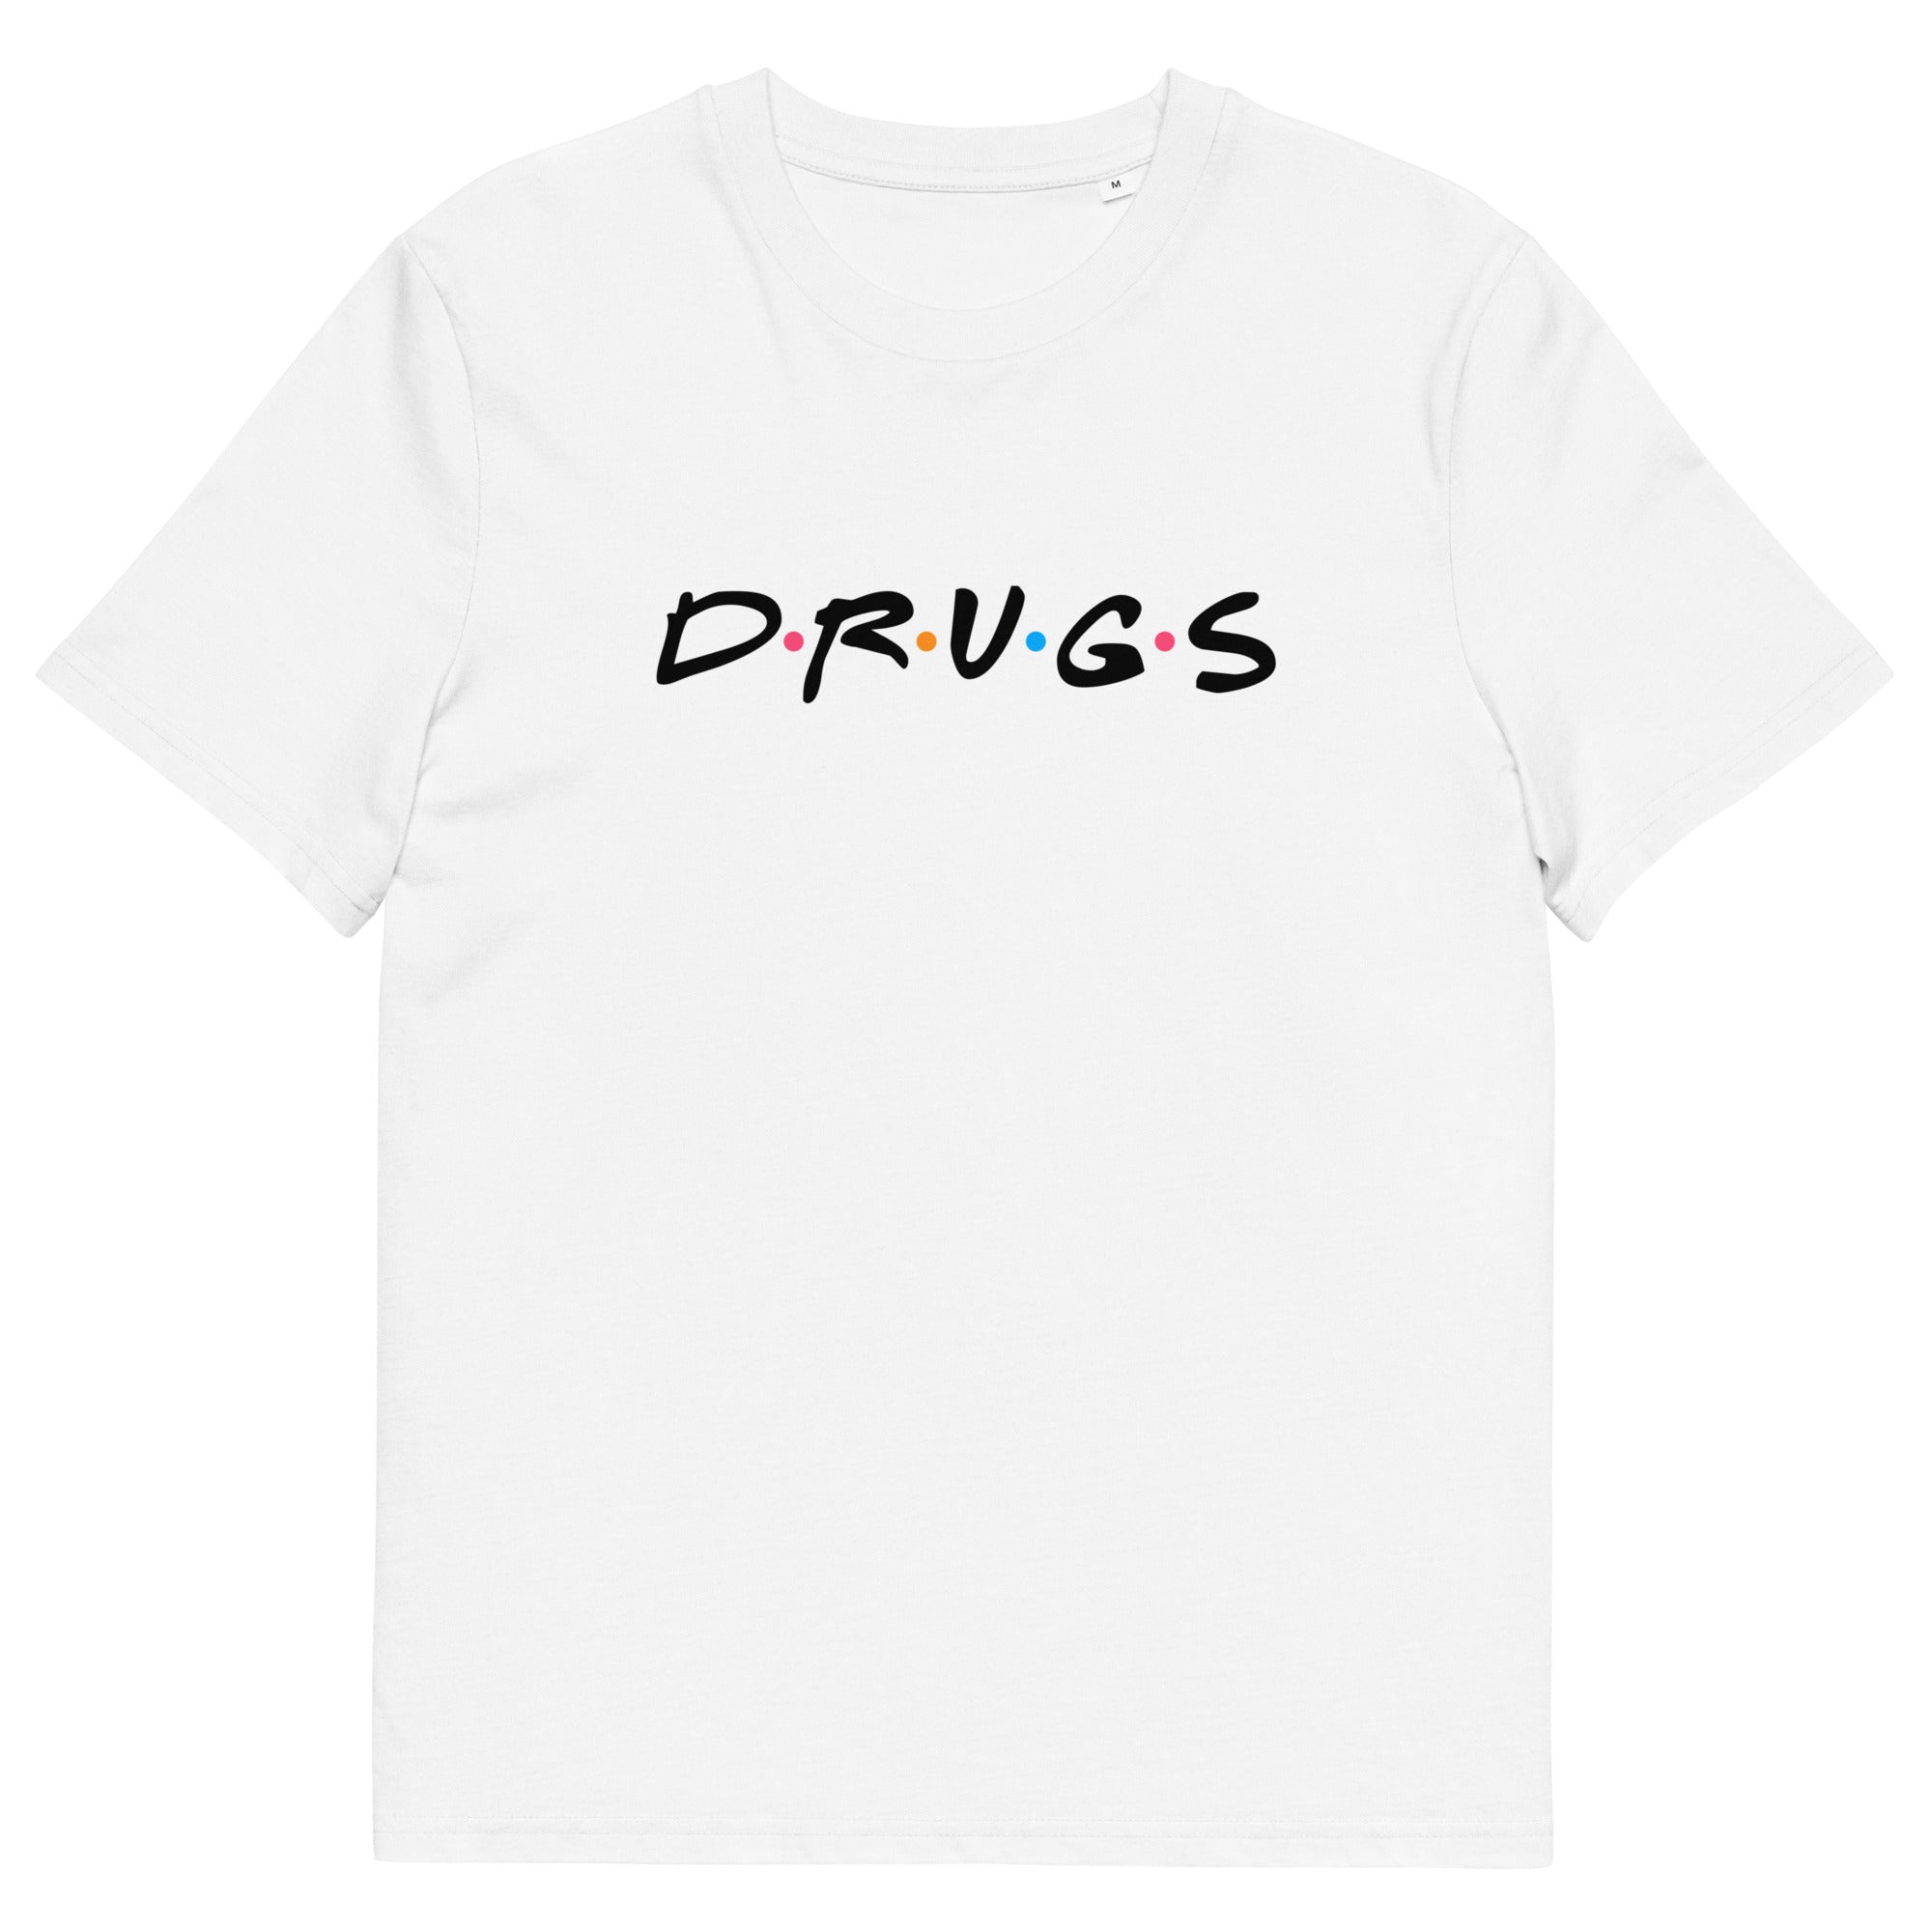 Drugs T-Shirt White